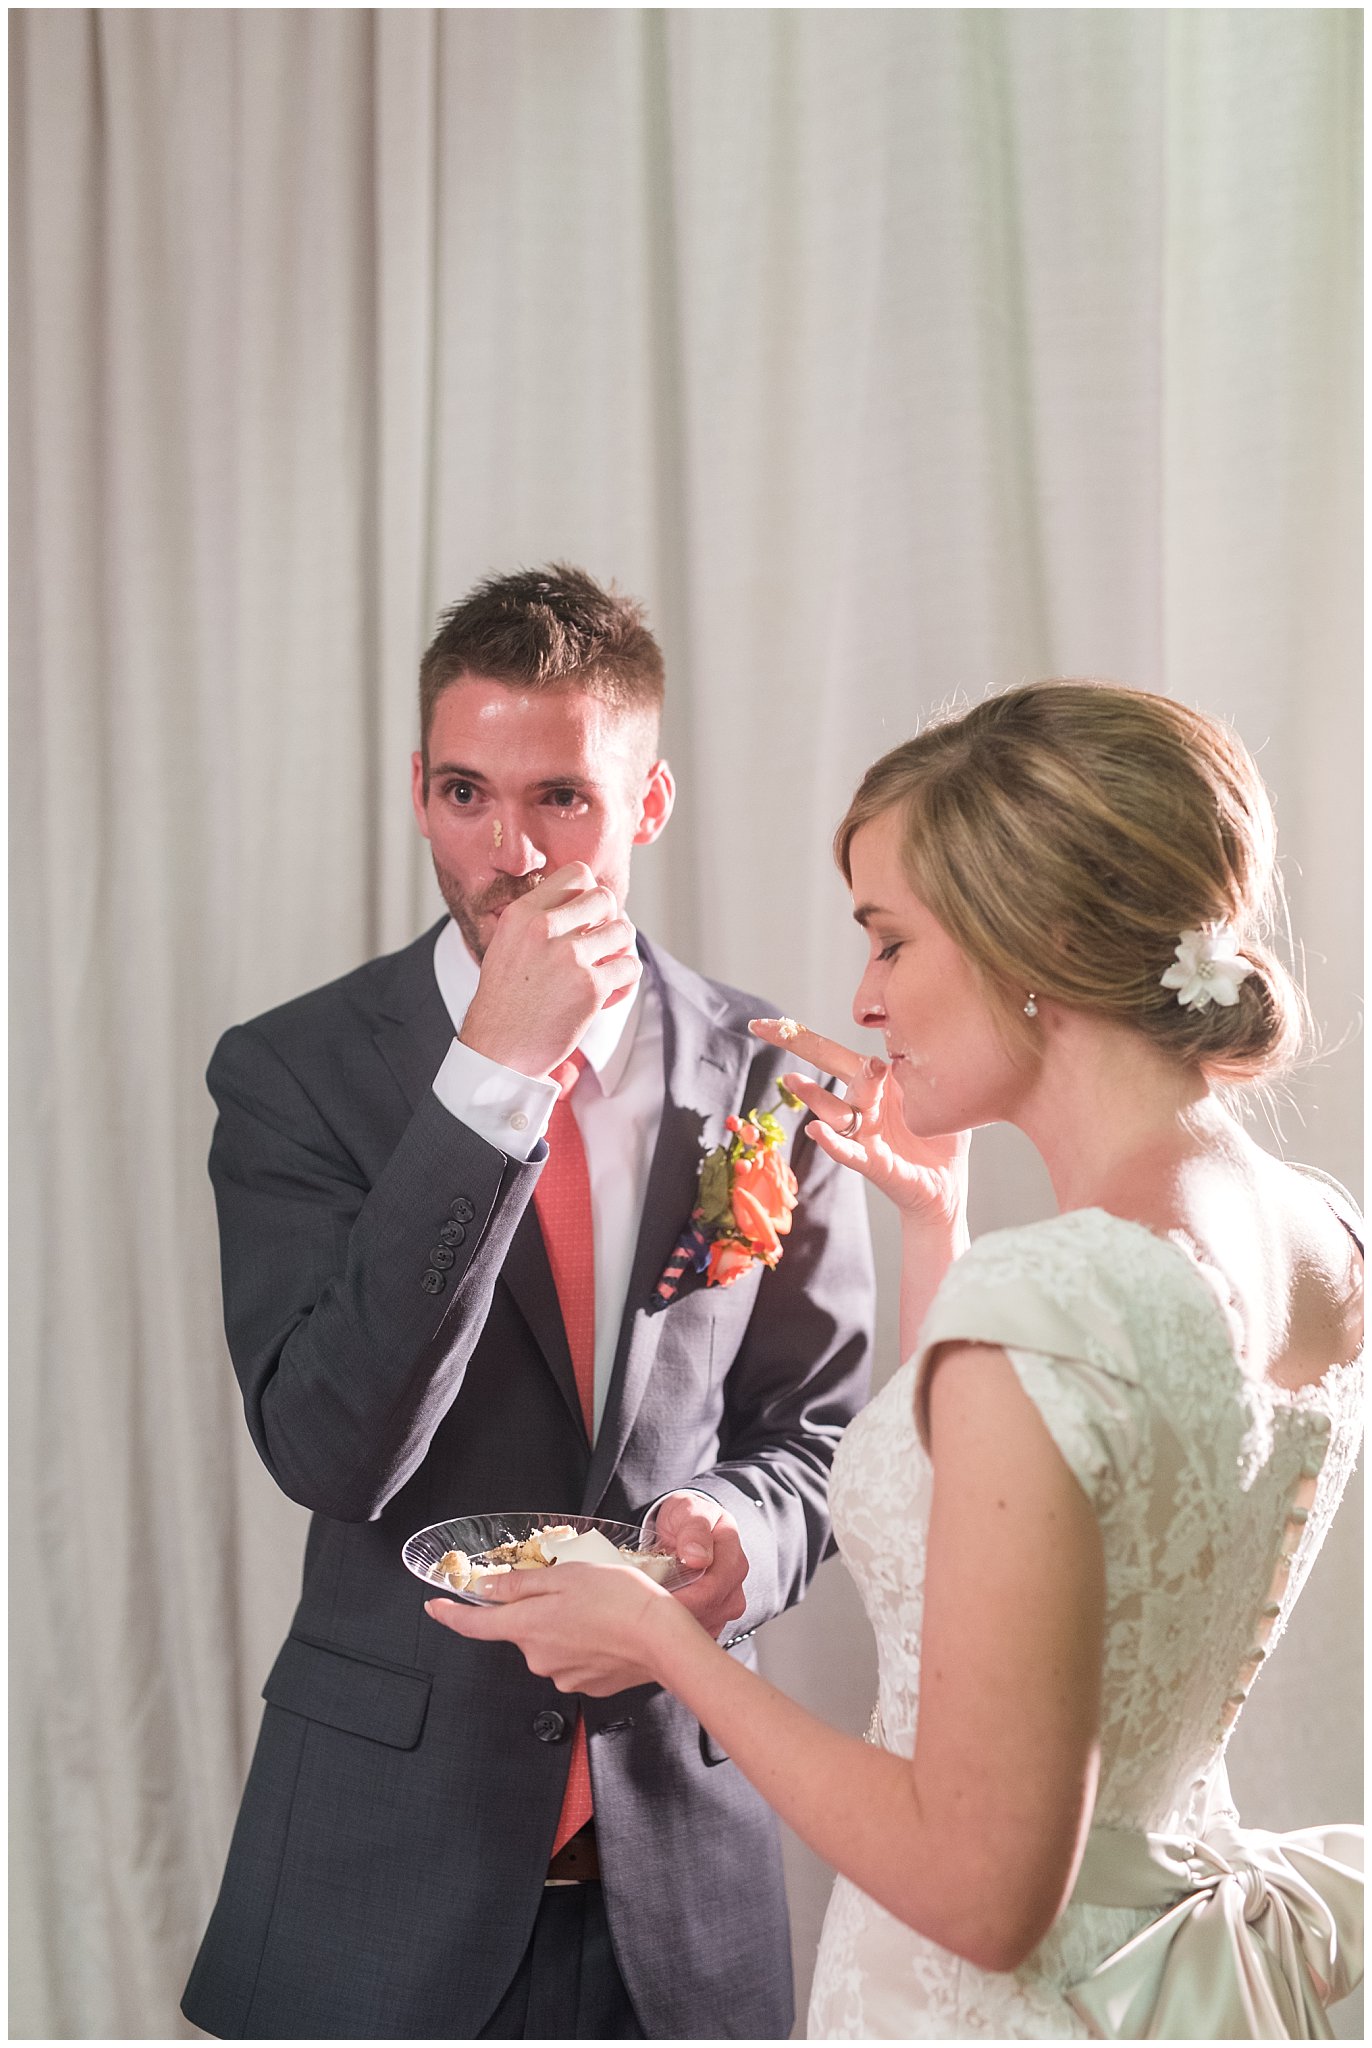 Salt Lake LDS wedding reception | Granite Bakery | Cake Cutting | Coral and grey wedding